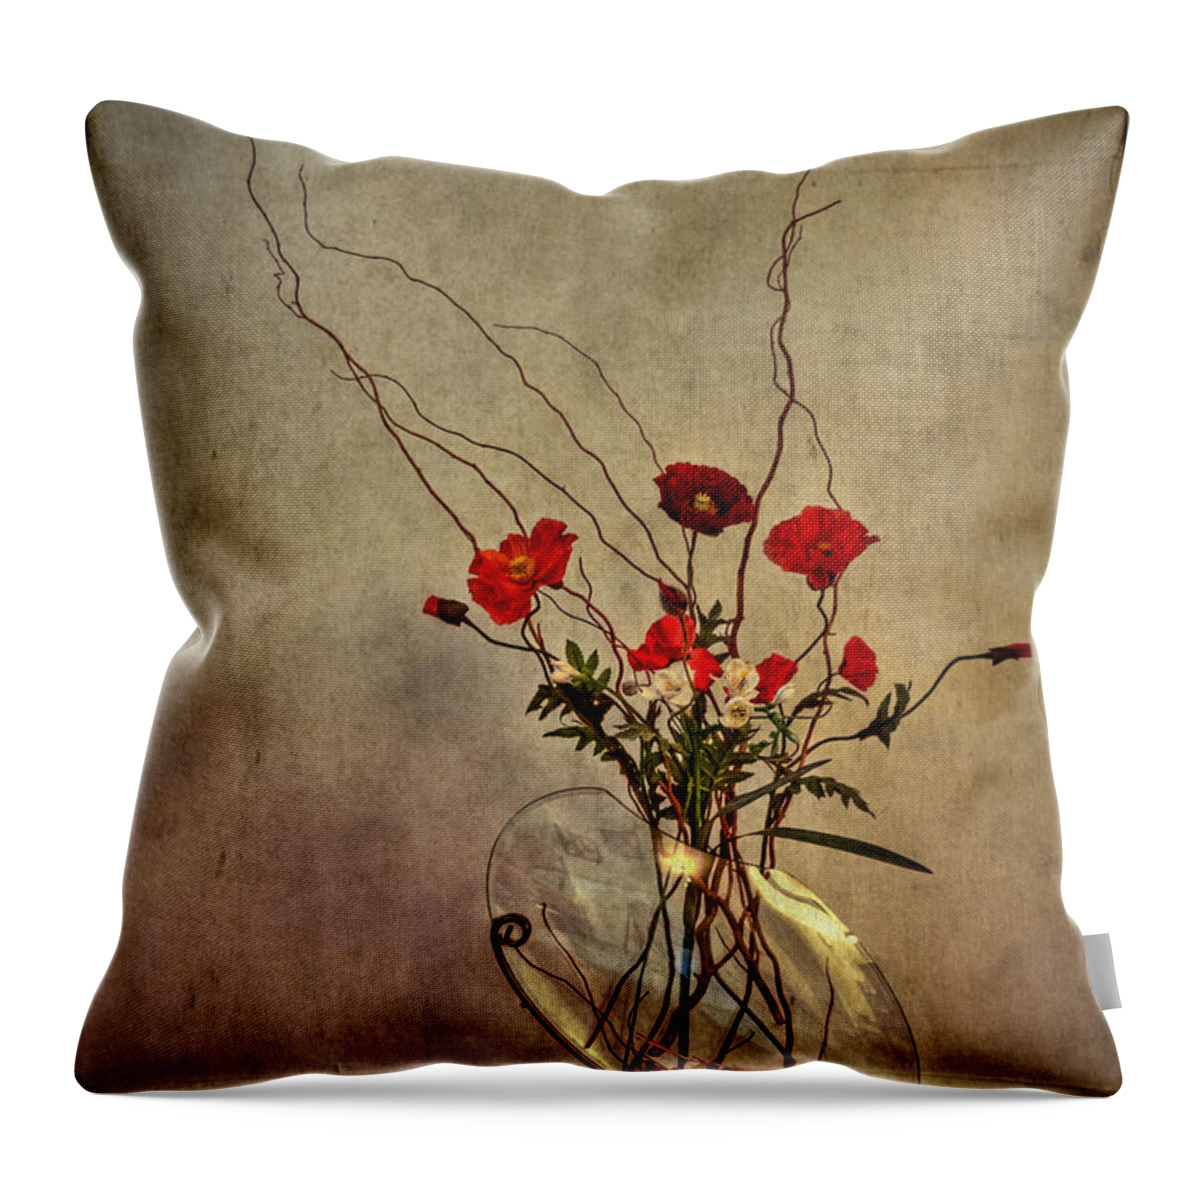 Flower Throw Pillow featuring the photograph Seeking Harmony by Evelina Kremsdorf